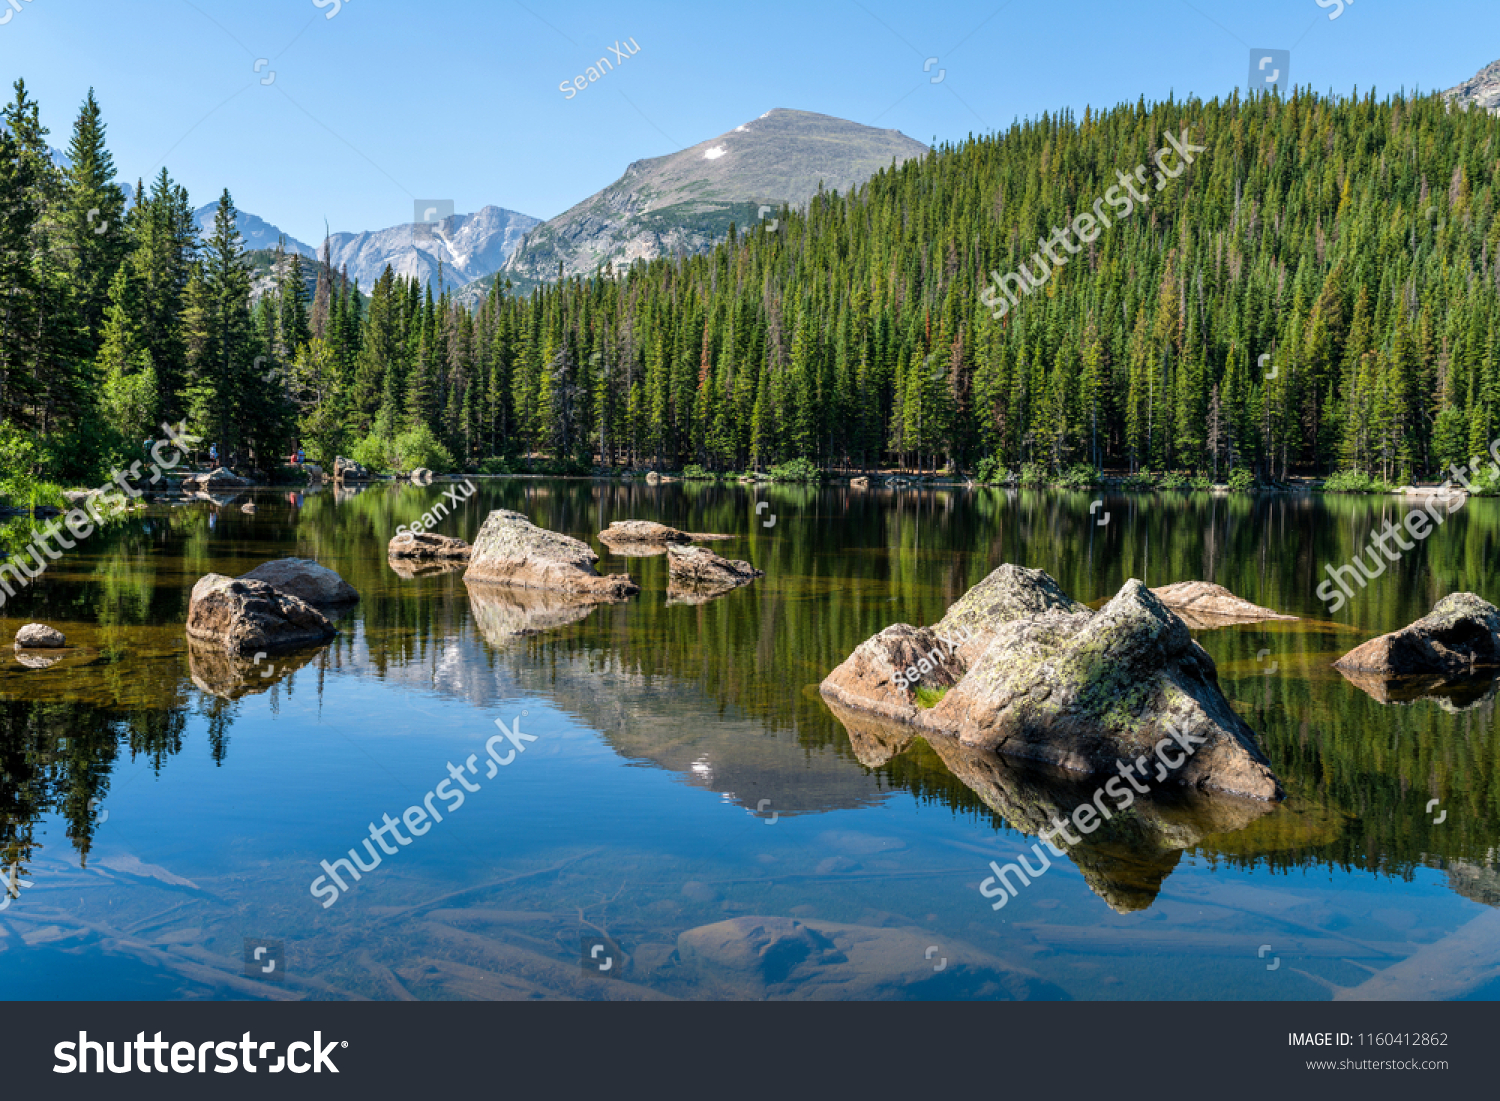 Bear Lake - A sunny summer morning view of a rocky section of Bear Lake, Rocky Mountain National Park, Colorado, USA. #1160412862